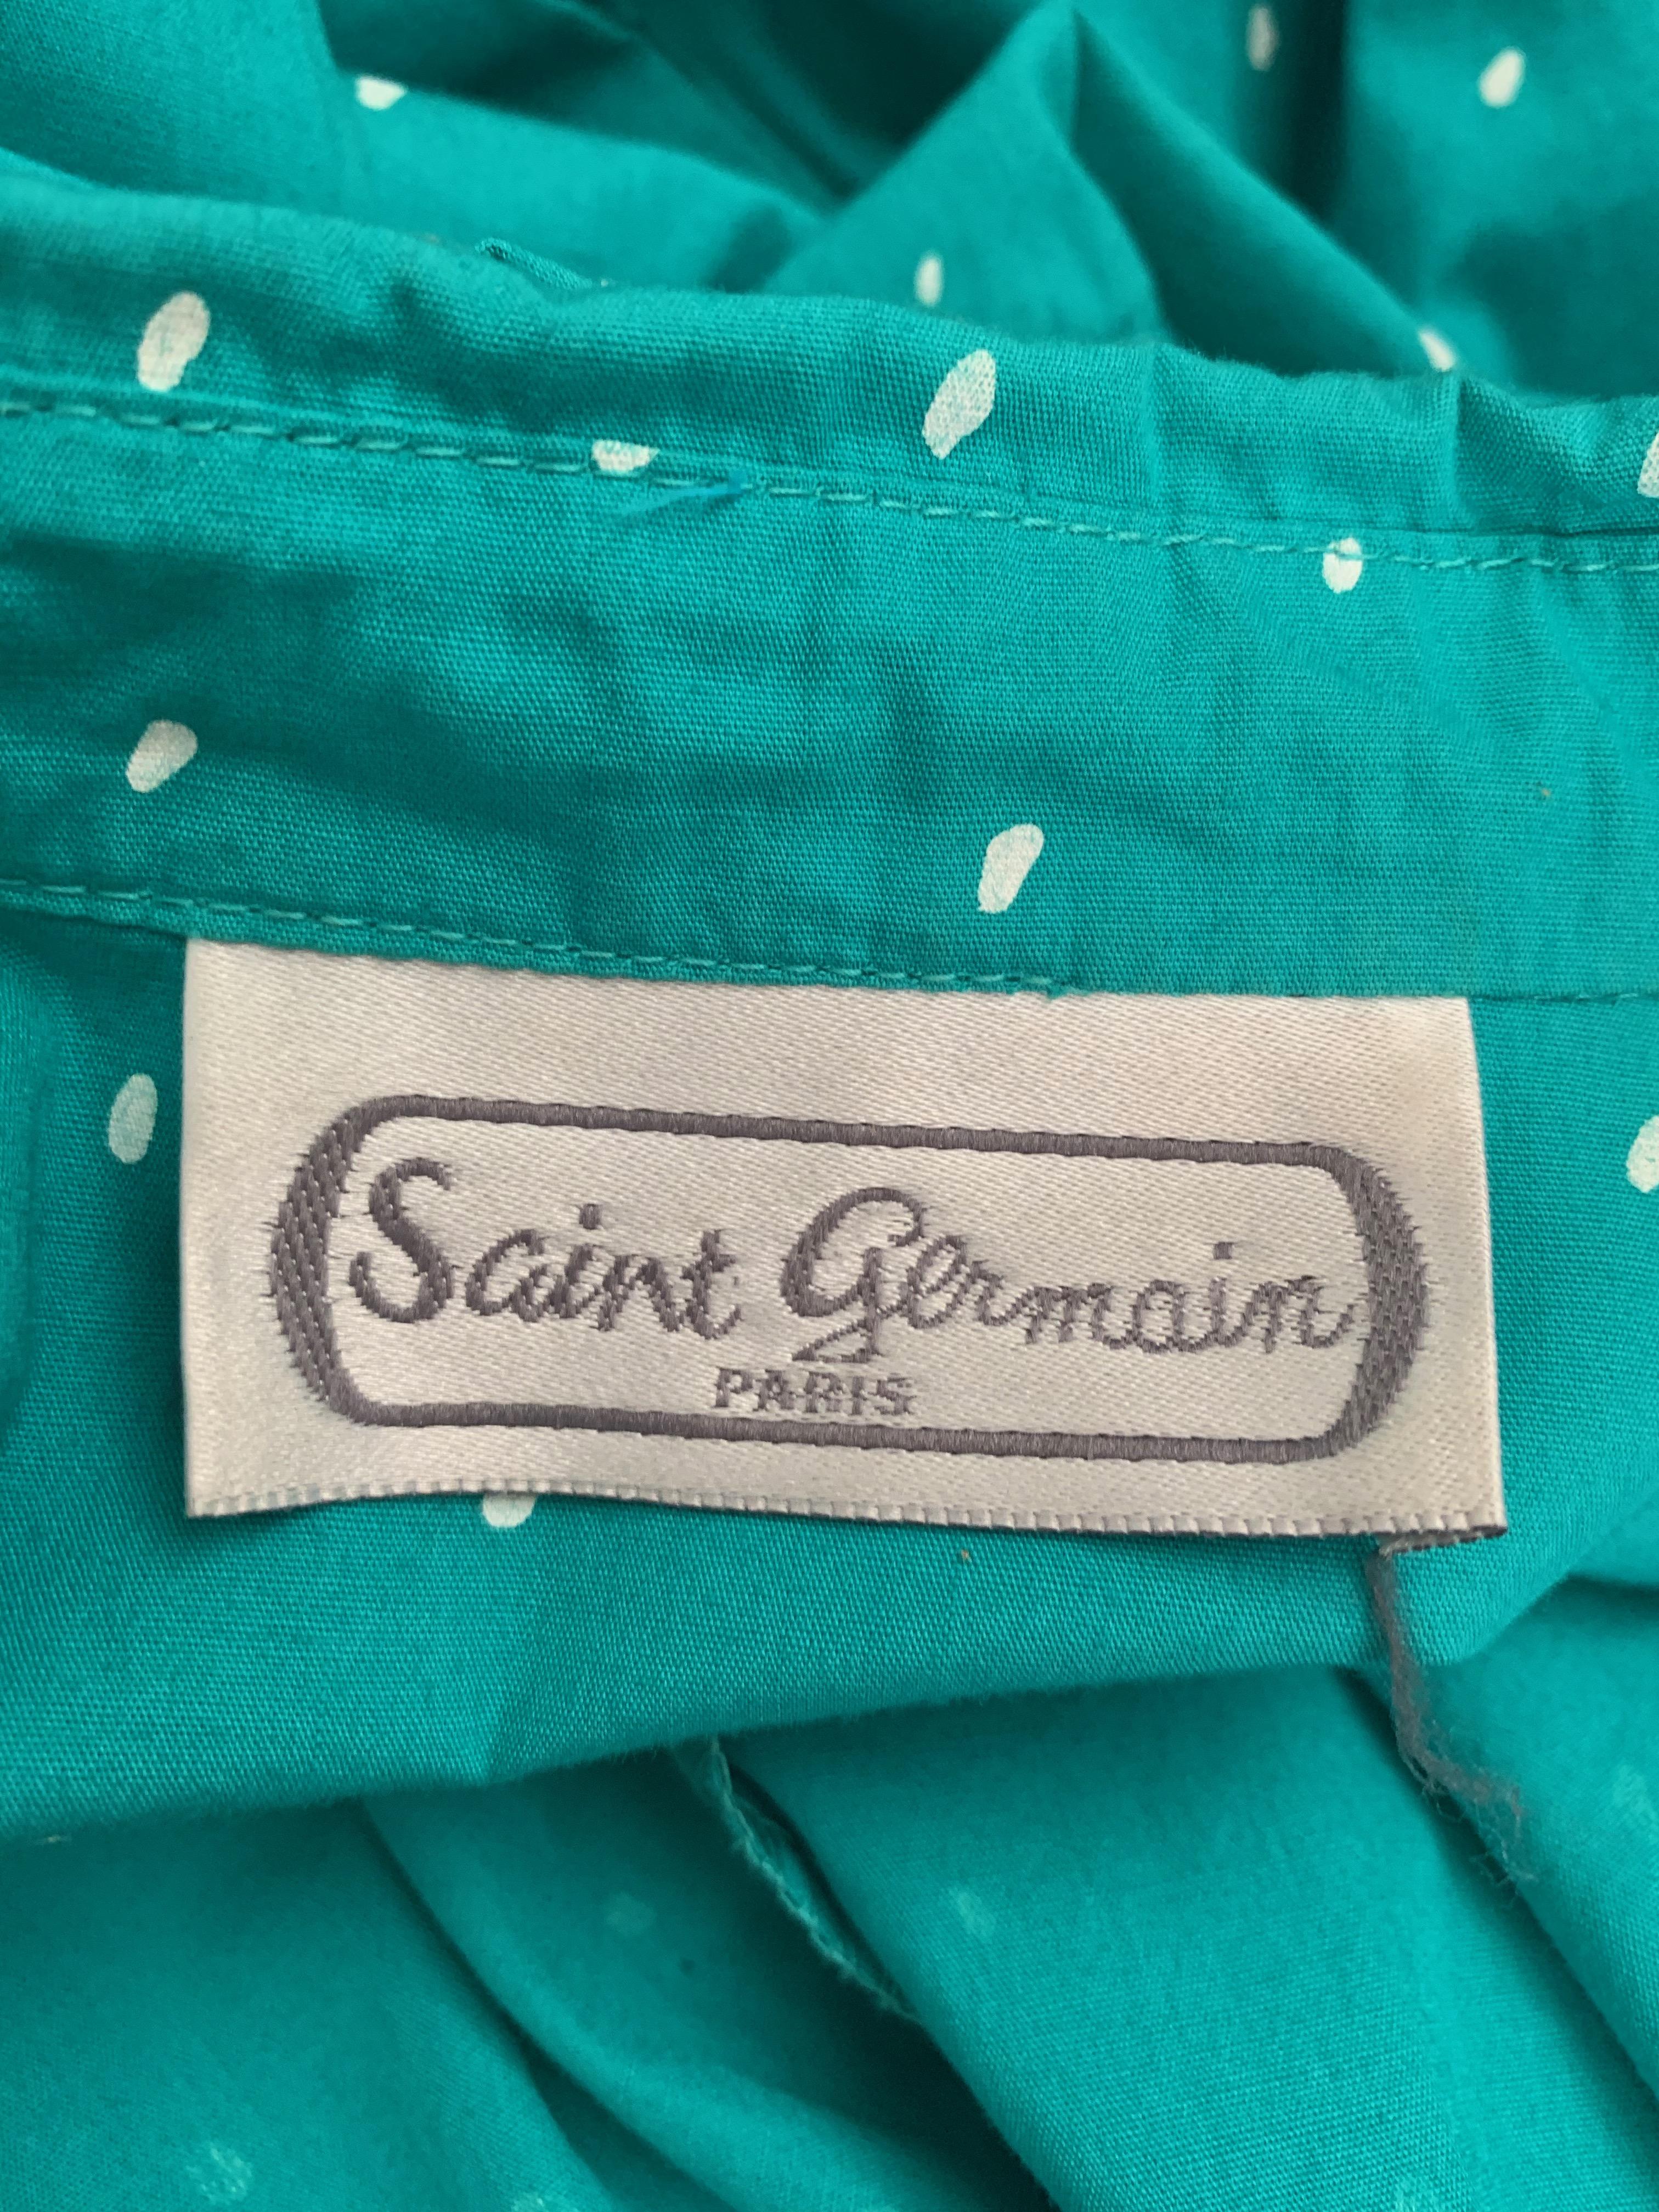 Saint Germain 1980s Cotton Polka Dot Jumpsuit with Pockets Size 4.  14